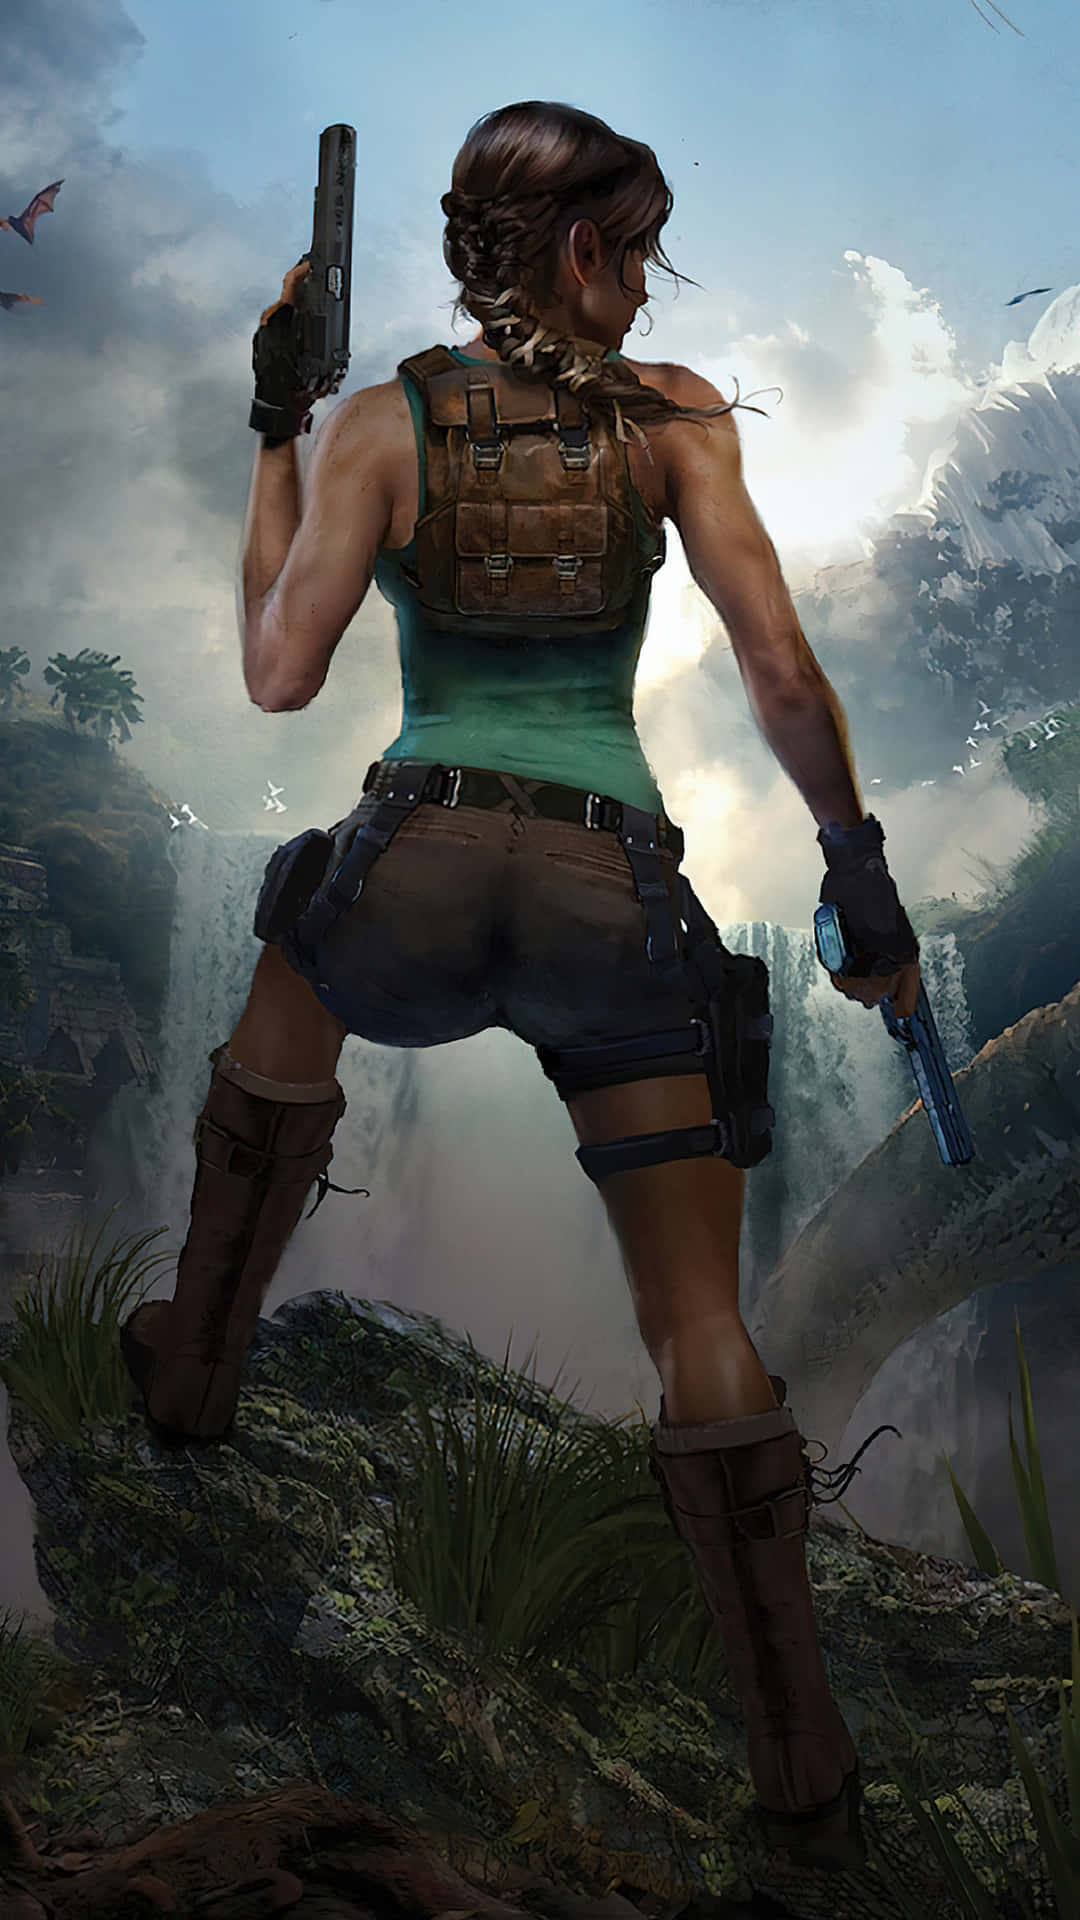 Lara Croft Adventure Stance Wallpaper